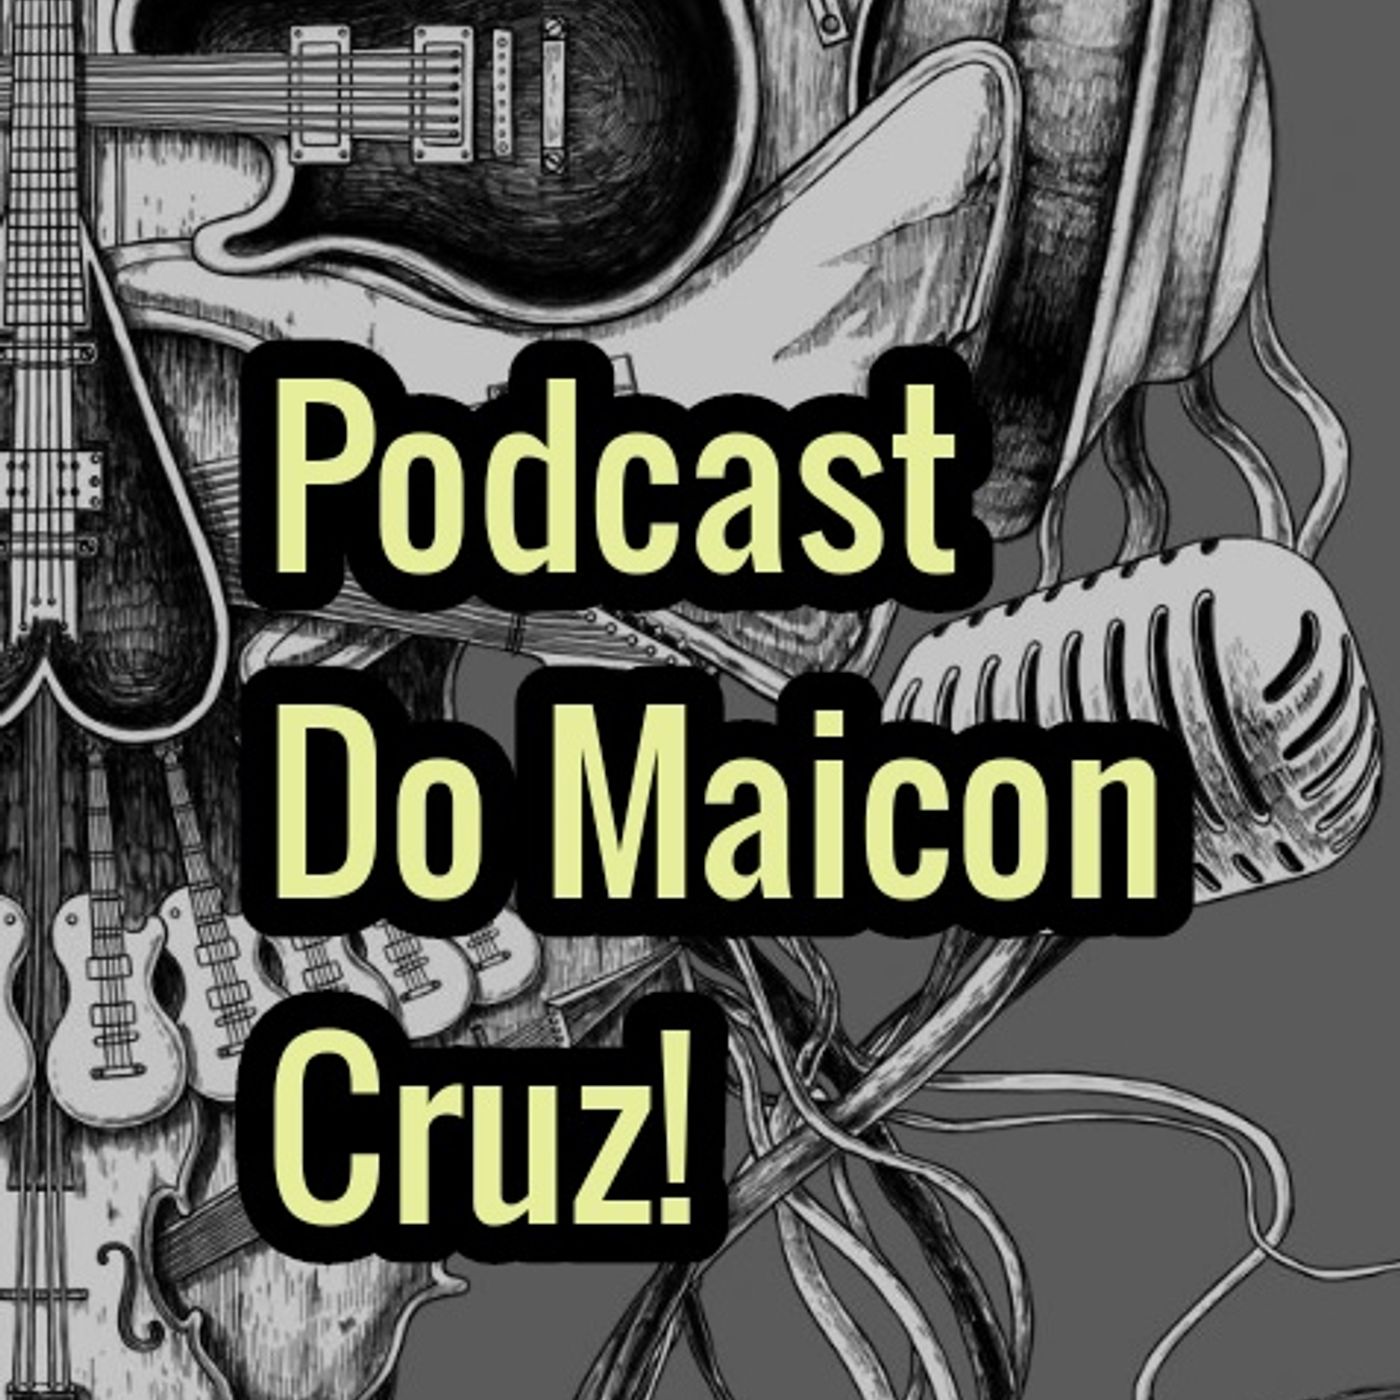 Maicon cruz podcast!